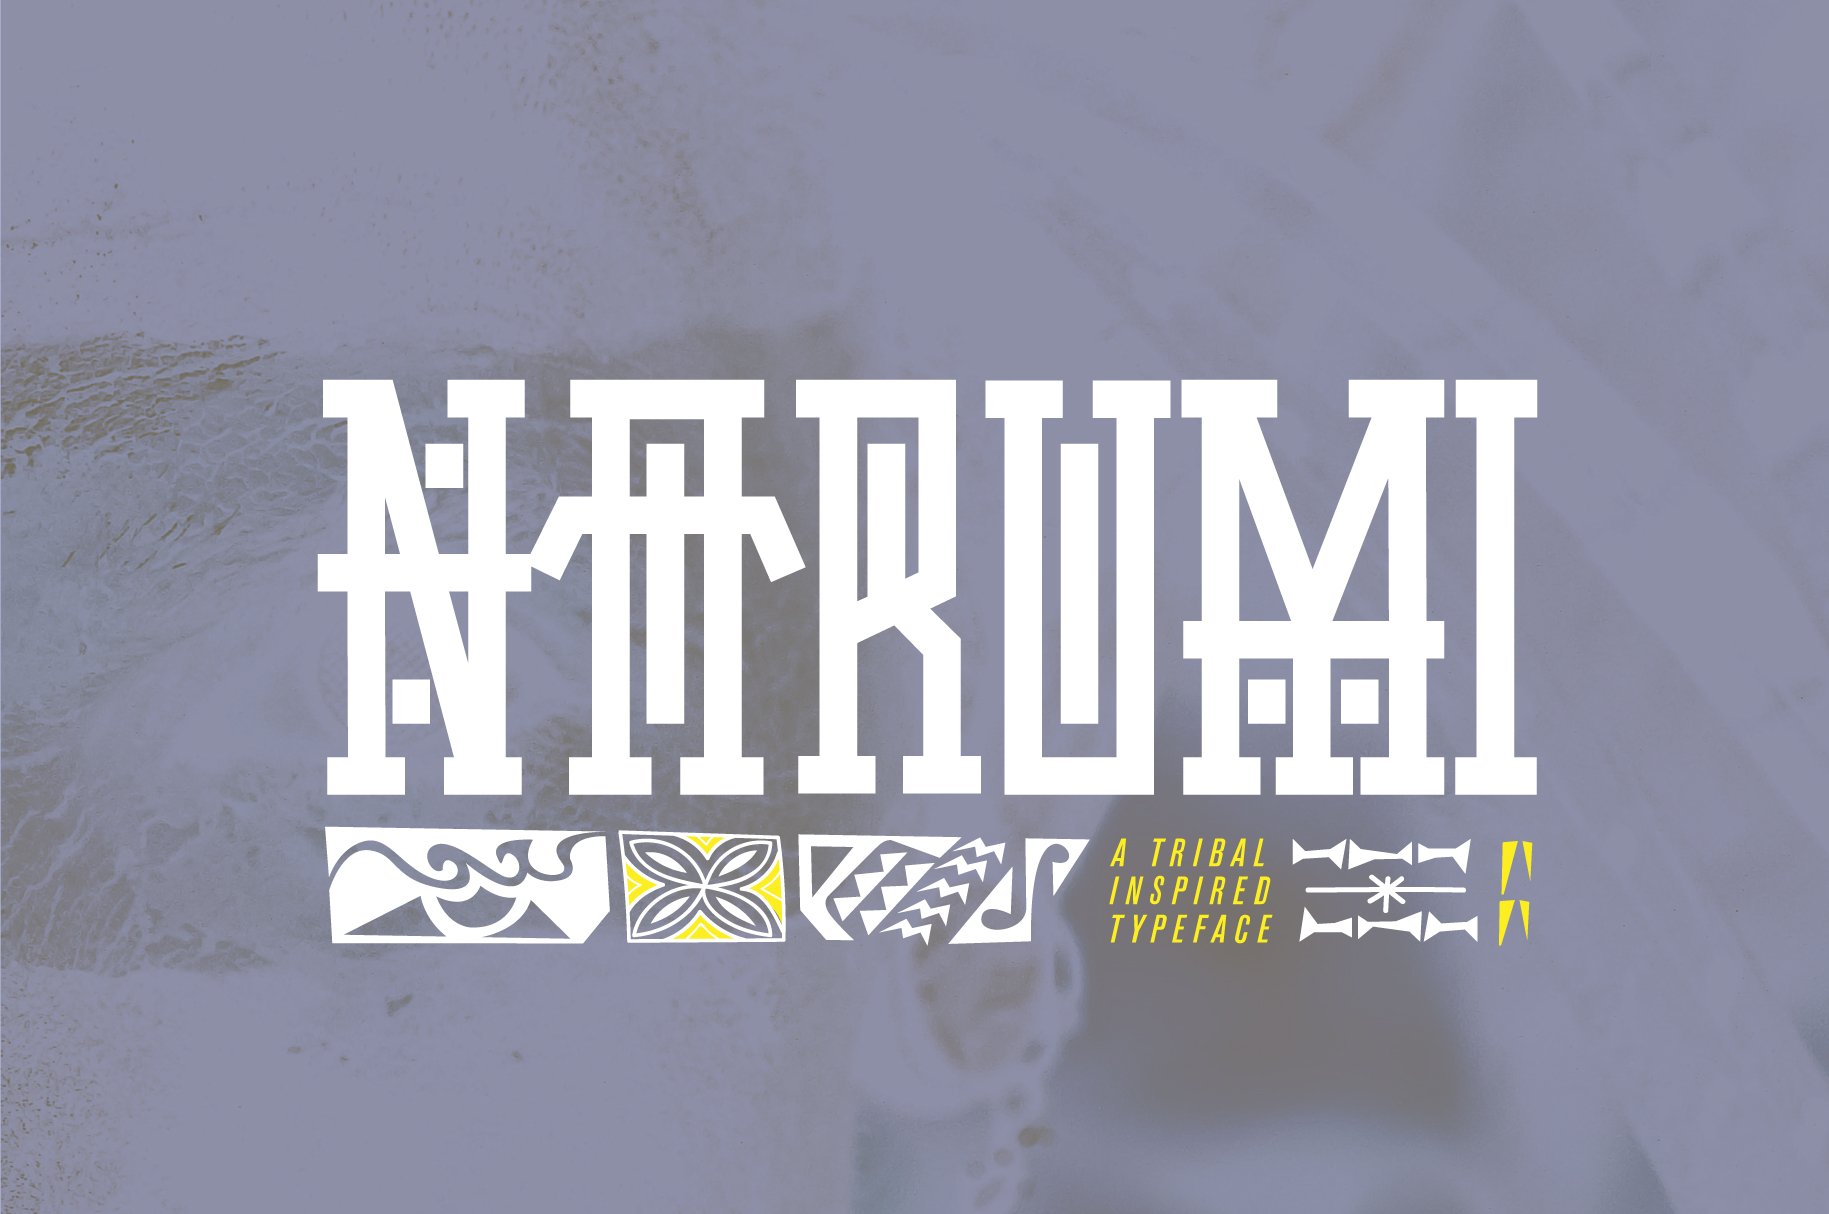 Narumi - Abstract Tribal Displaycover image.